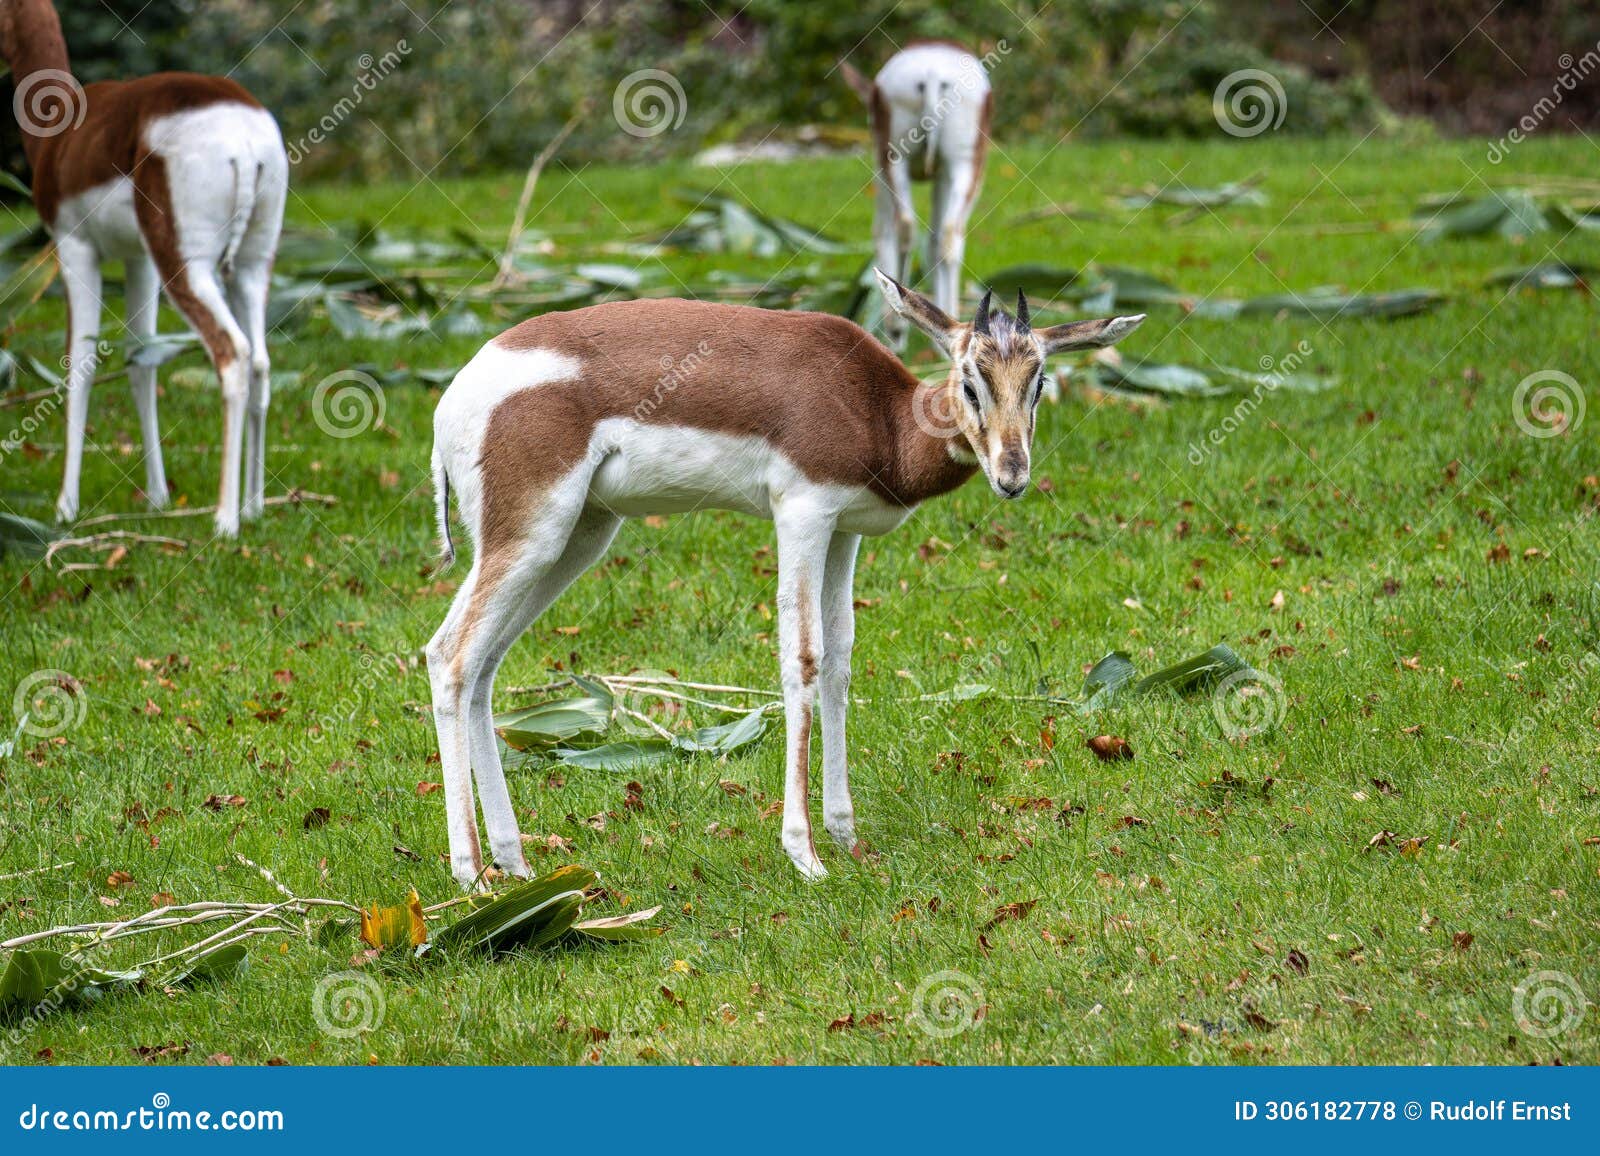 dama gazelle, gazella dama mhorr or mhorr gazelle is a species of gazelle